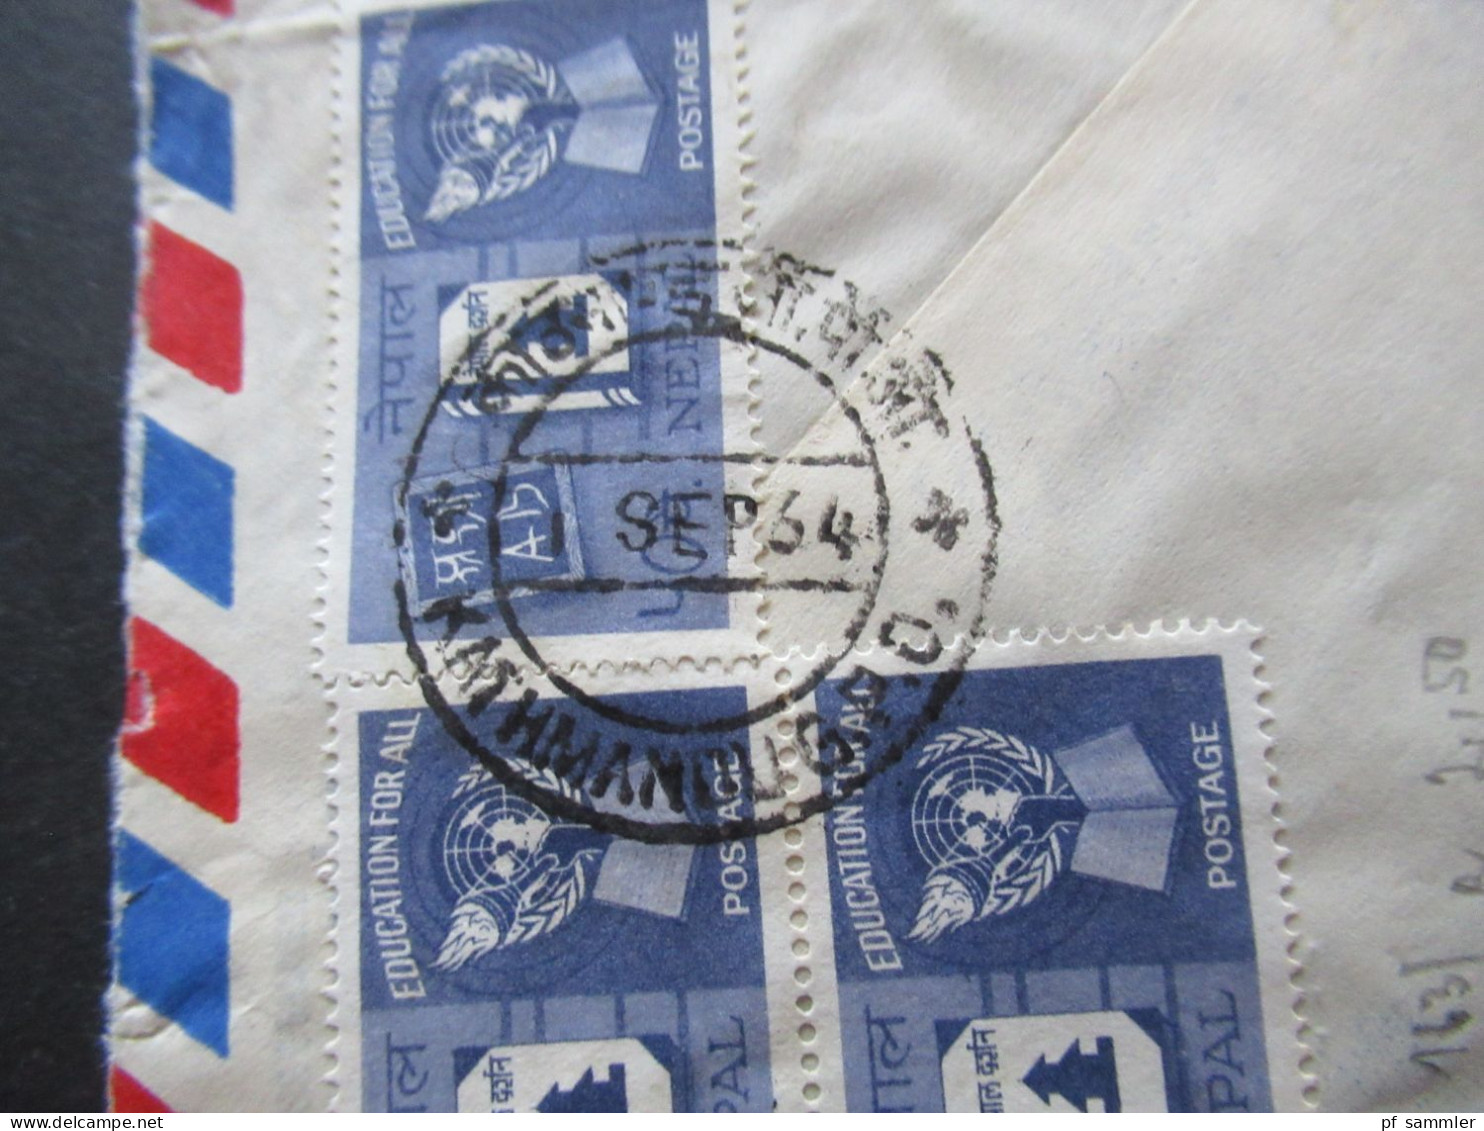 Asien Nepal Air Mail Luftpost Kathmandu GPO 1964 Education For All (3) MiF / Under Postal Certificate Auslandsbrief - Nepal